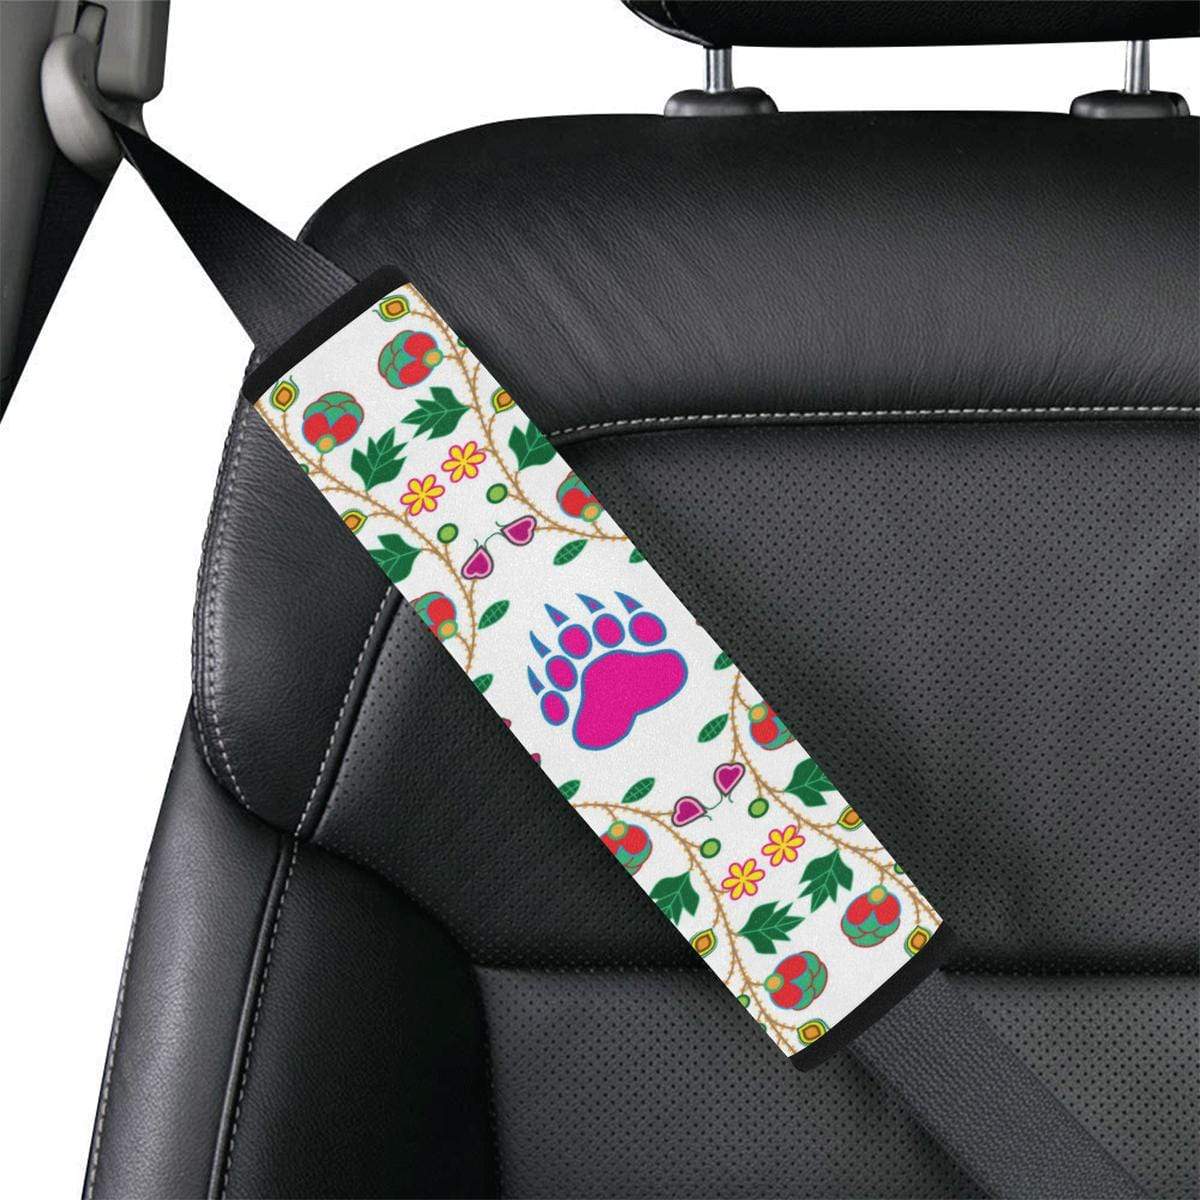 Geometric Floral Fall - White Car Seat Belt Cover 7''x12.6'' Car Seat Belt Cover 7''x12.6'' e-joyer 